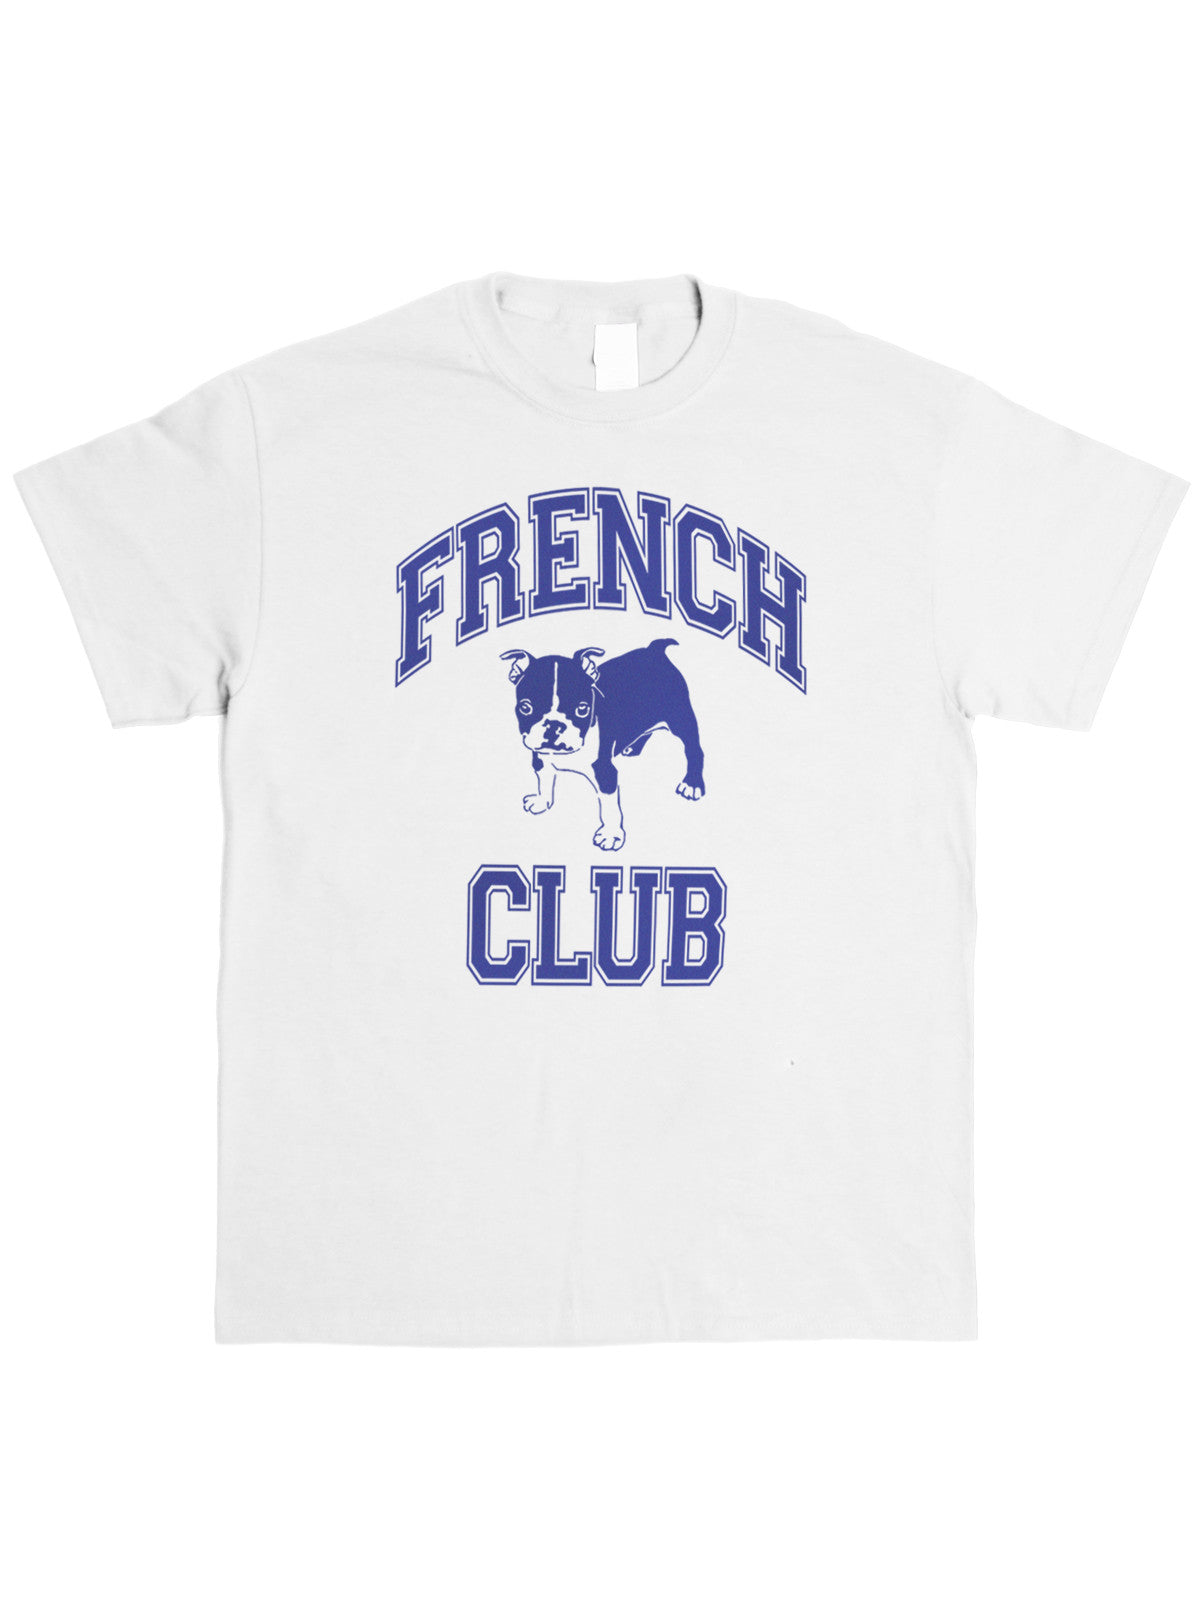 French Club Tee